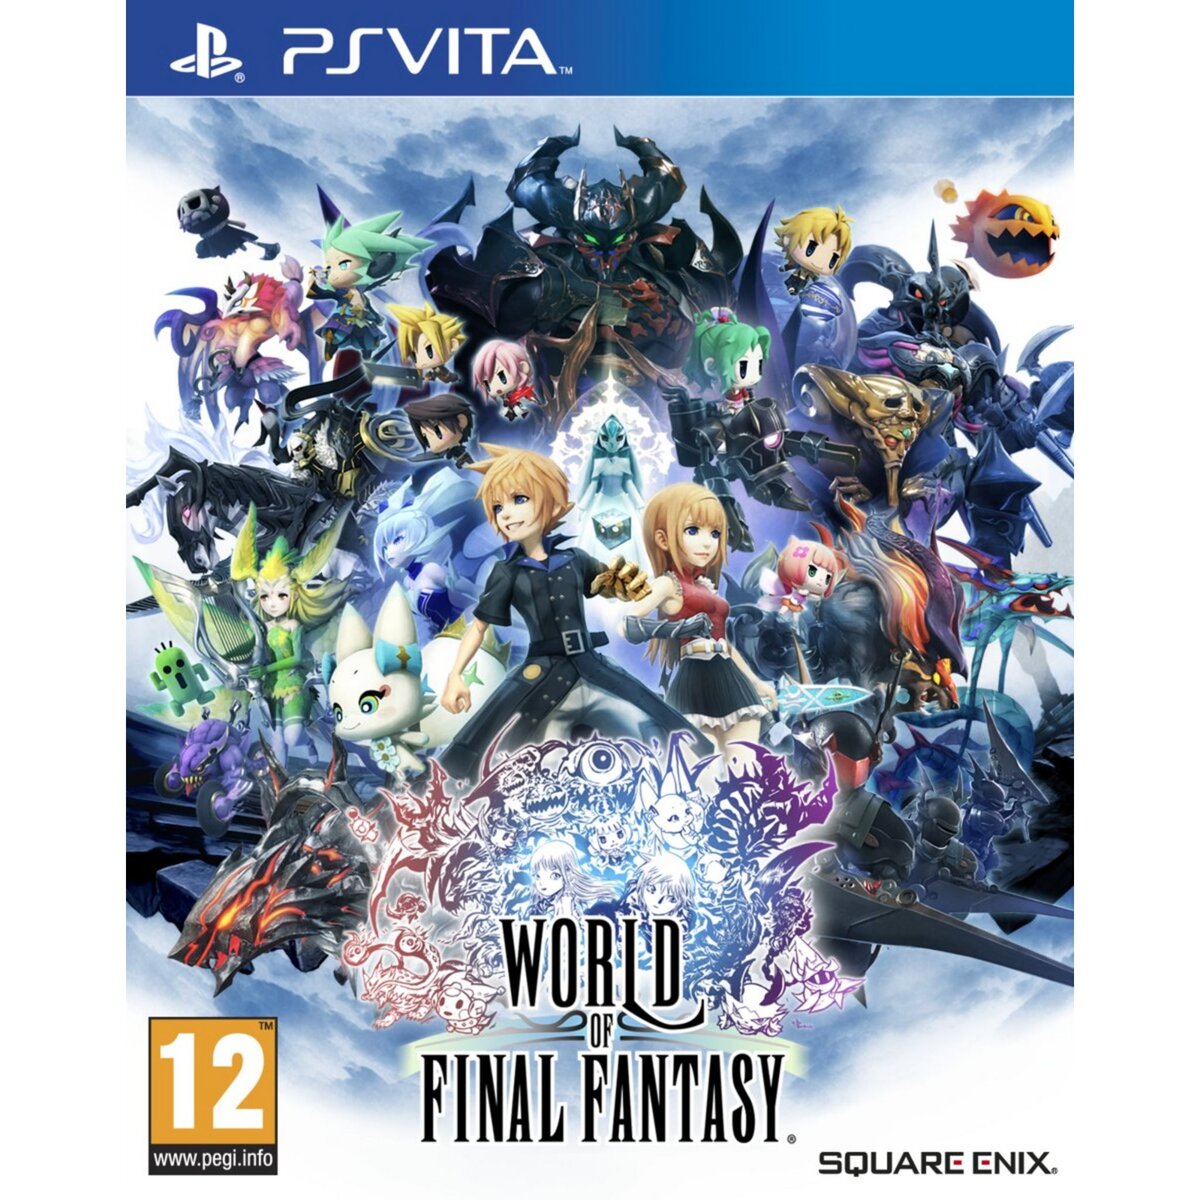 World of Final Fantasy PS Vita 